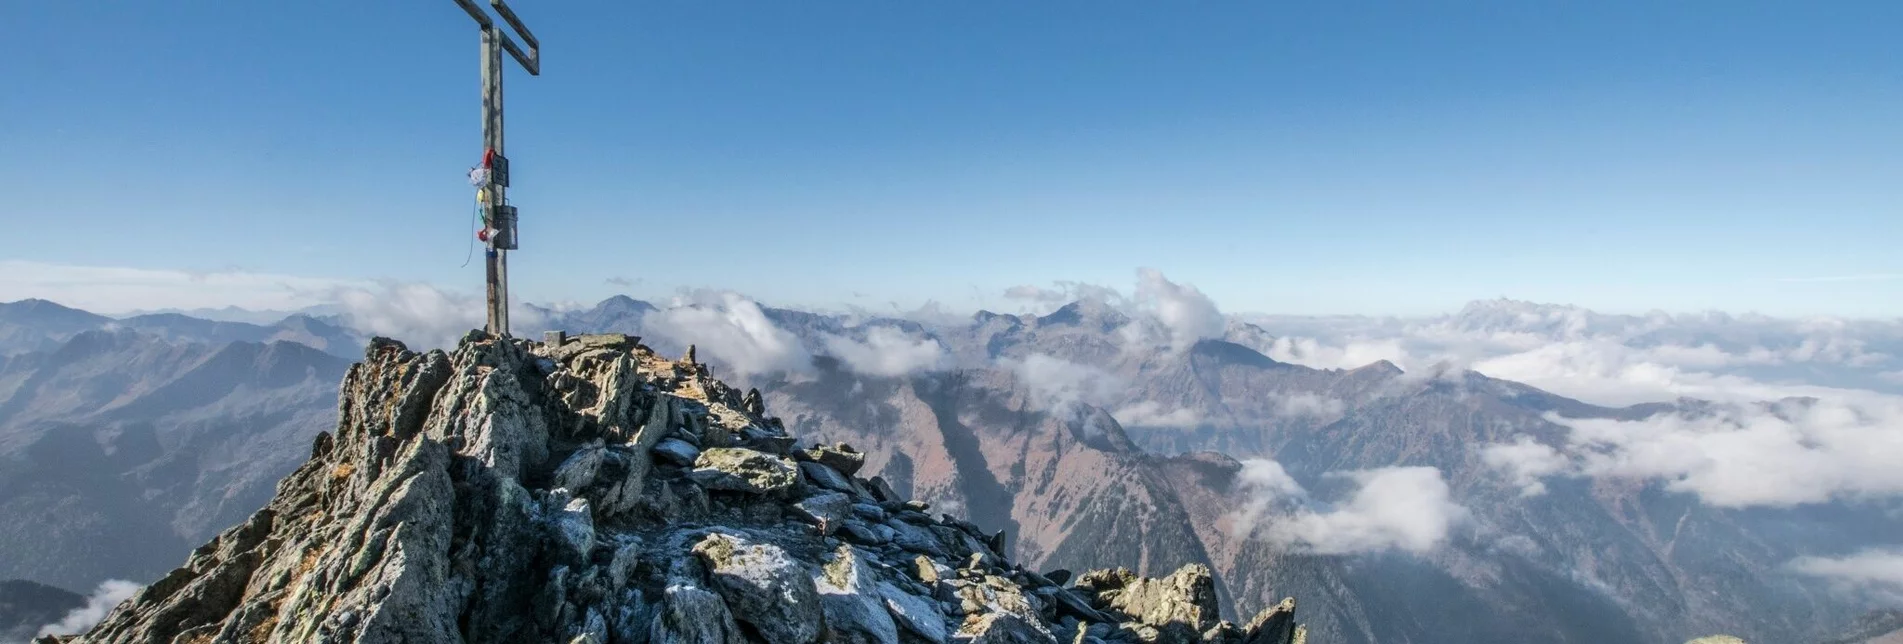 Bergtour Gipfeltour zum Knallstein - Touren-Impression #1 | © TVB Schladming-Dachstein